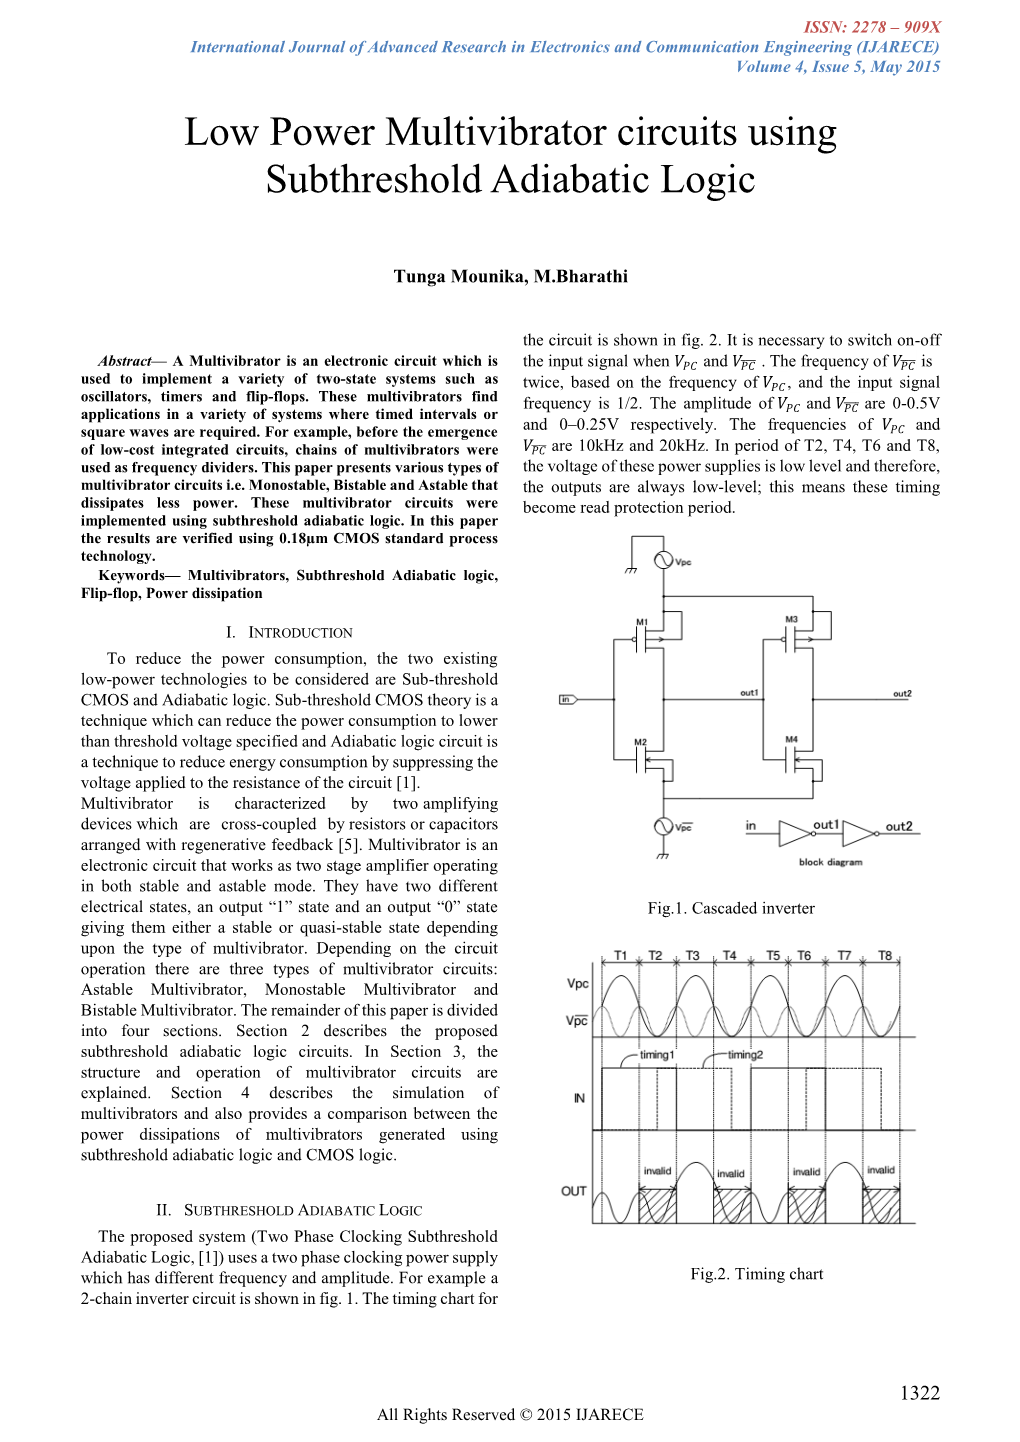 Low Power Multivibrator Circuits Using Subthreshold Adiabatic Logic